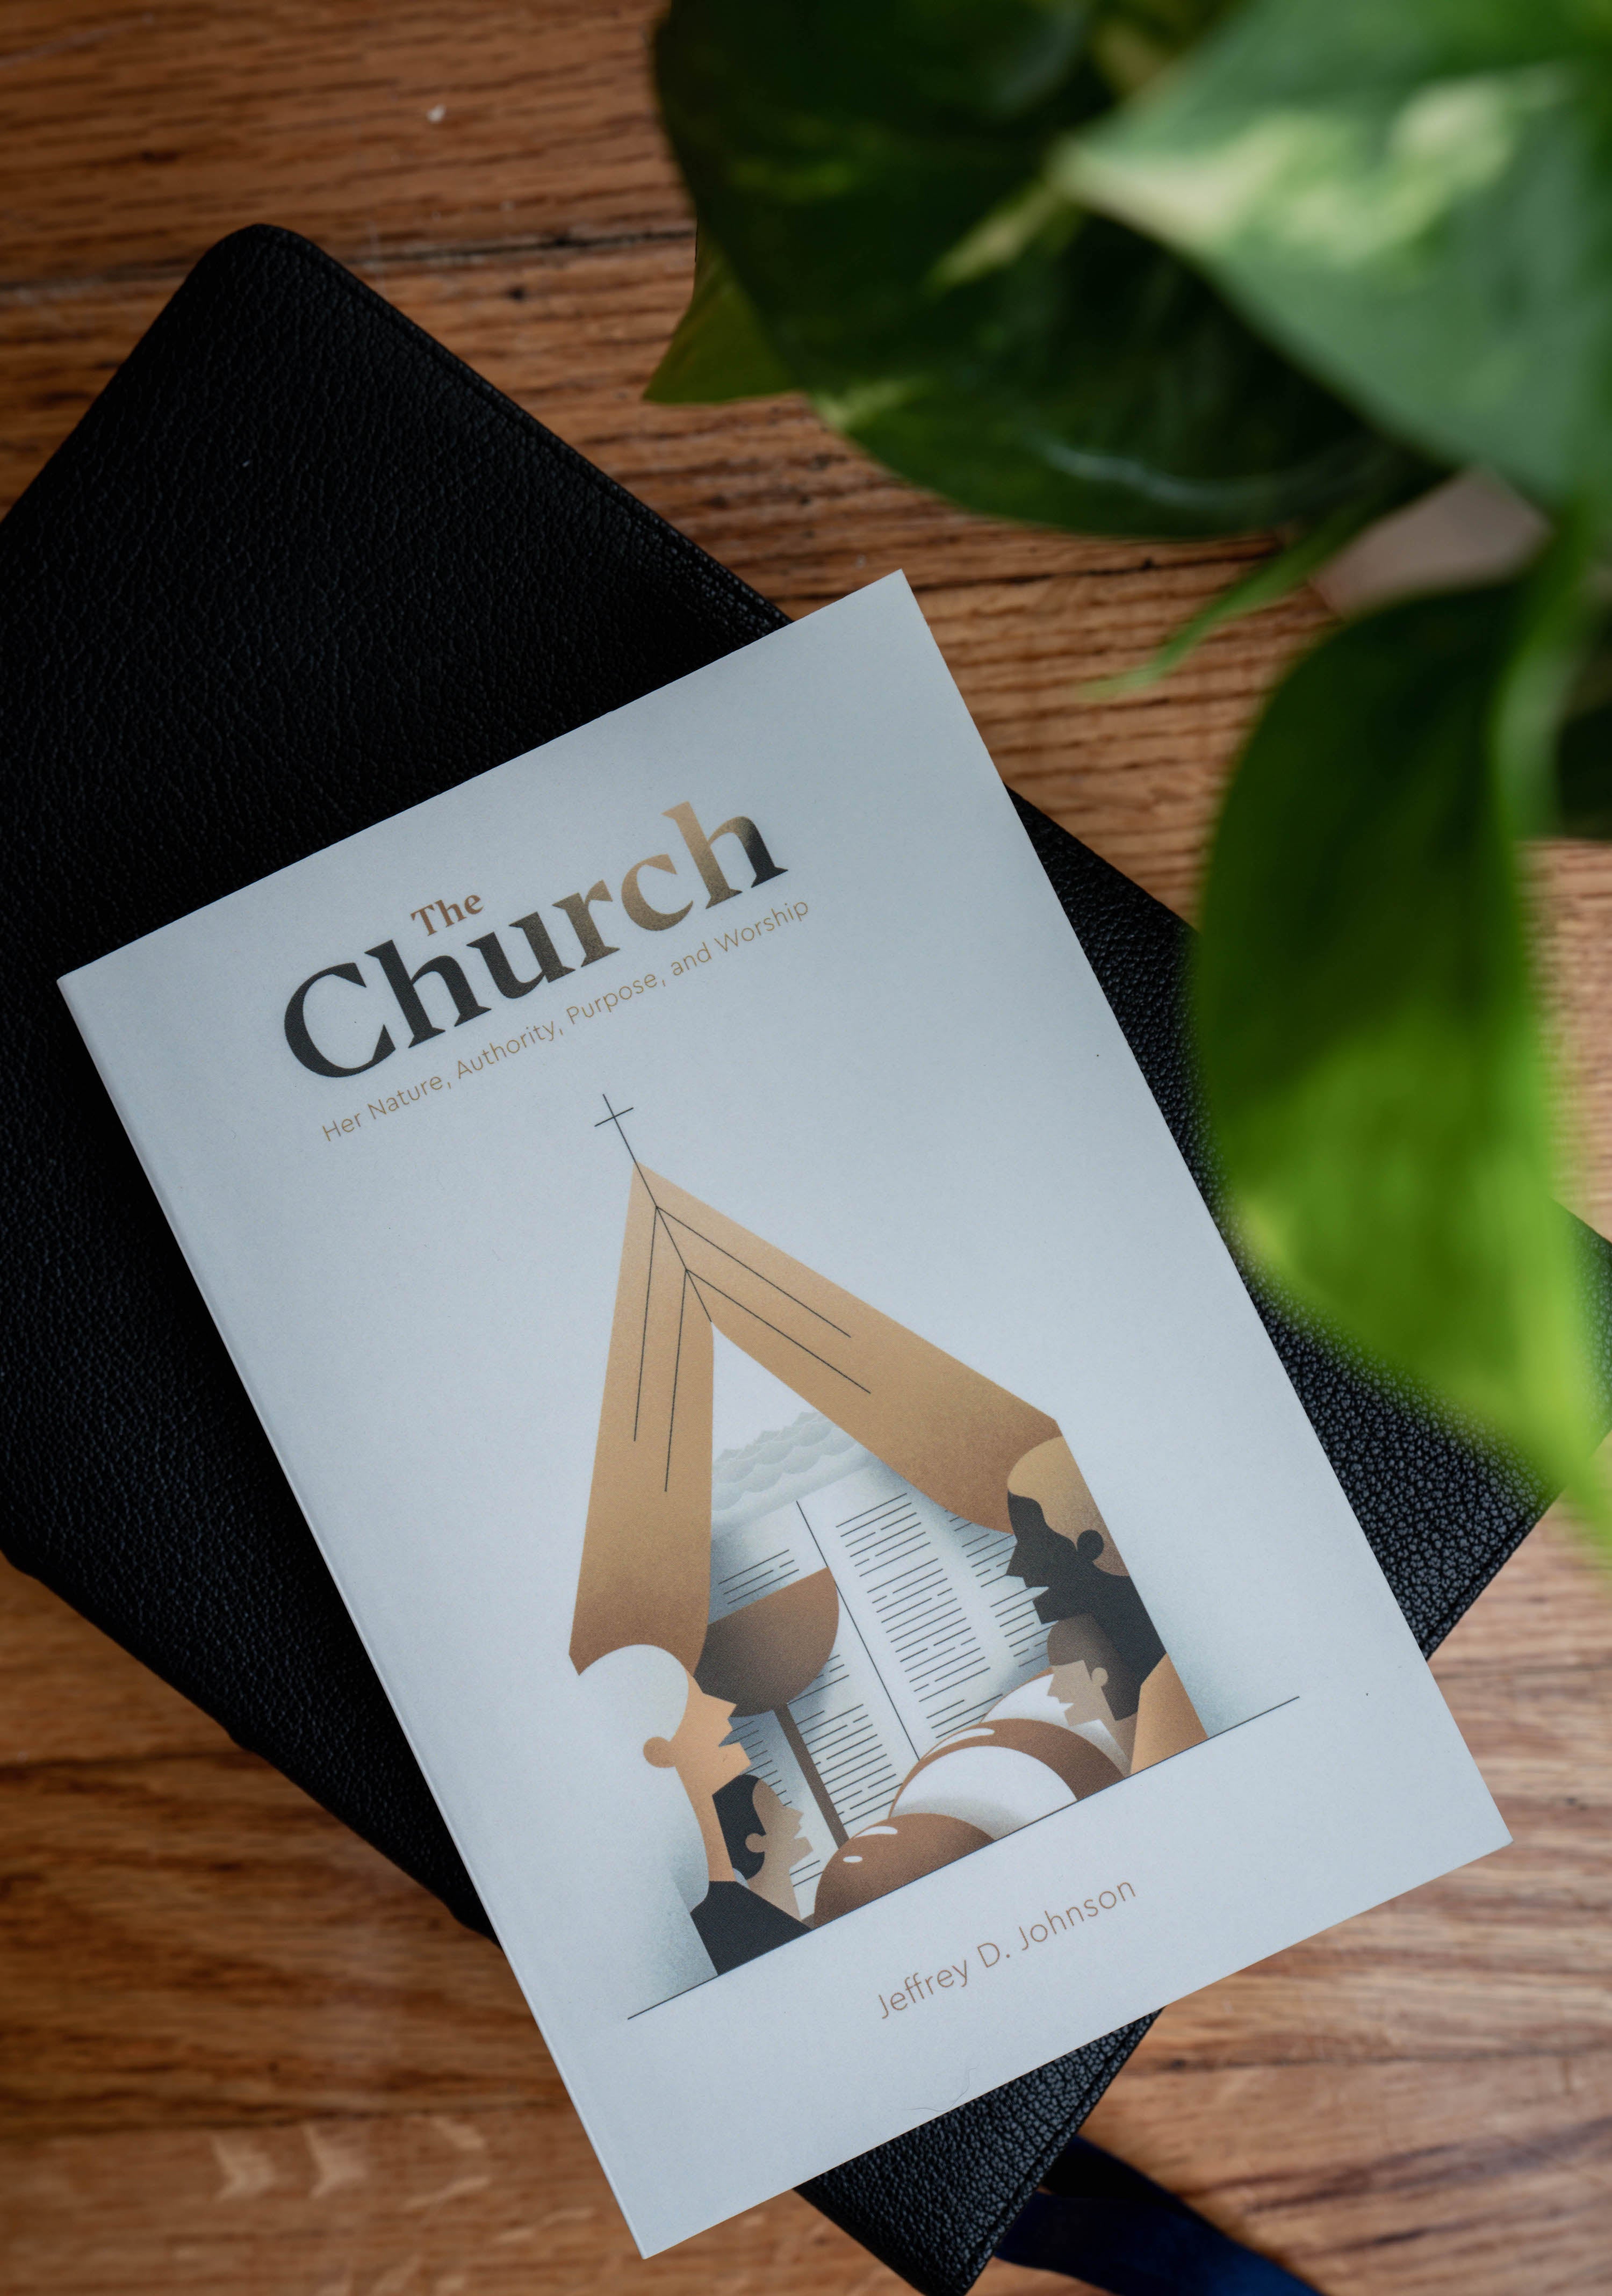 The Church: Her Nature, Authority, Purpose, and Worship - 10 Books